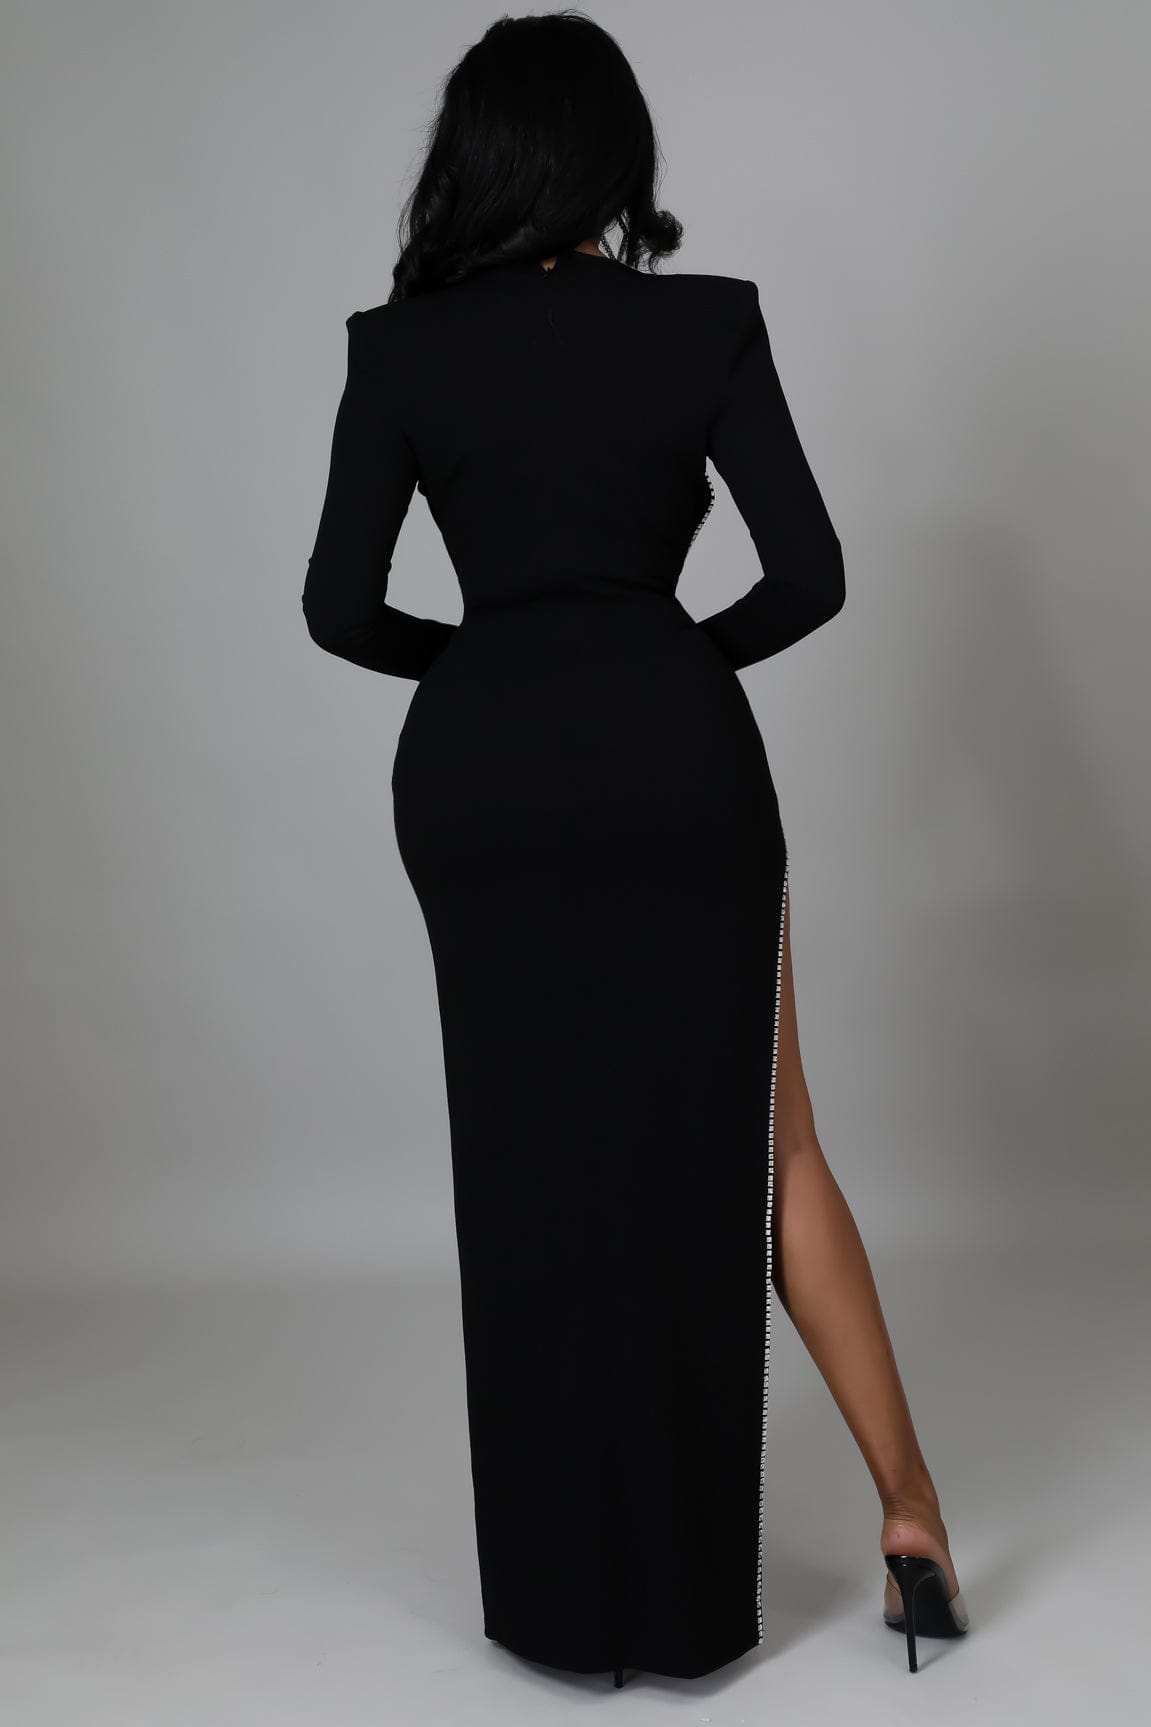 Toni Bodysuit Rhinestone Dress (Black)